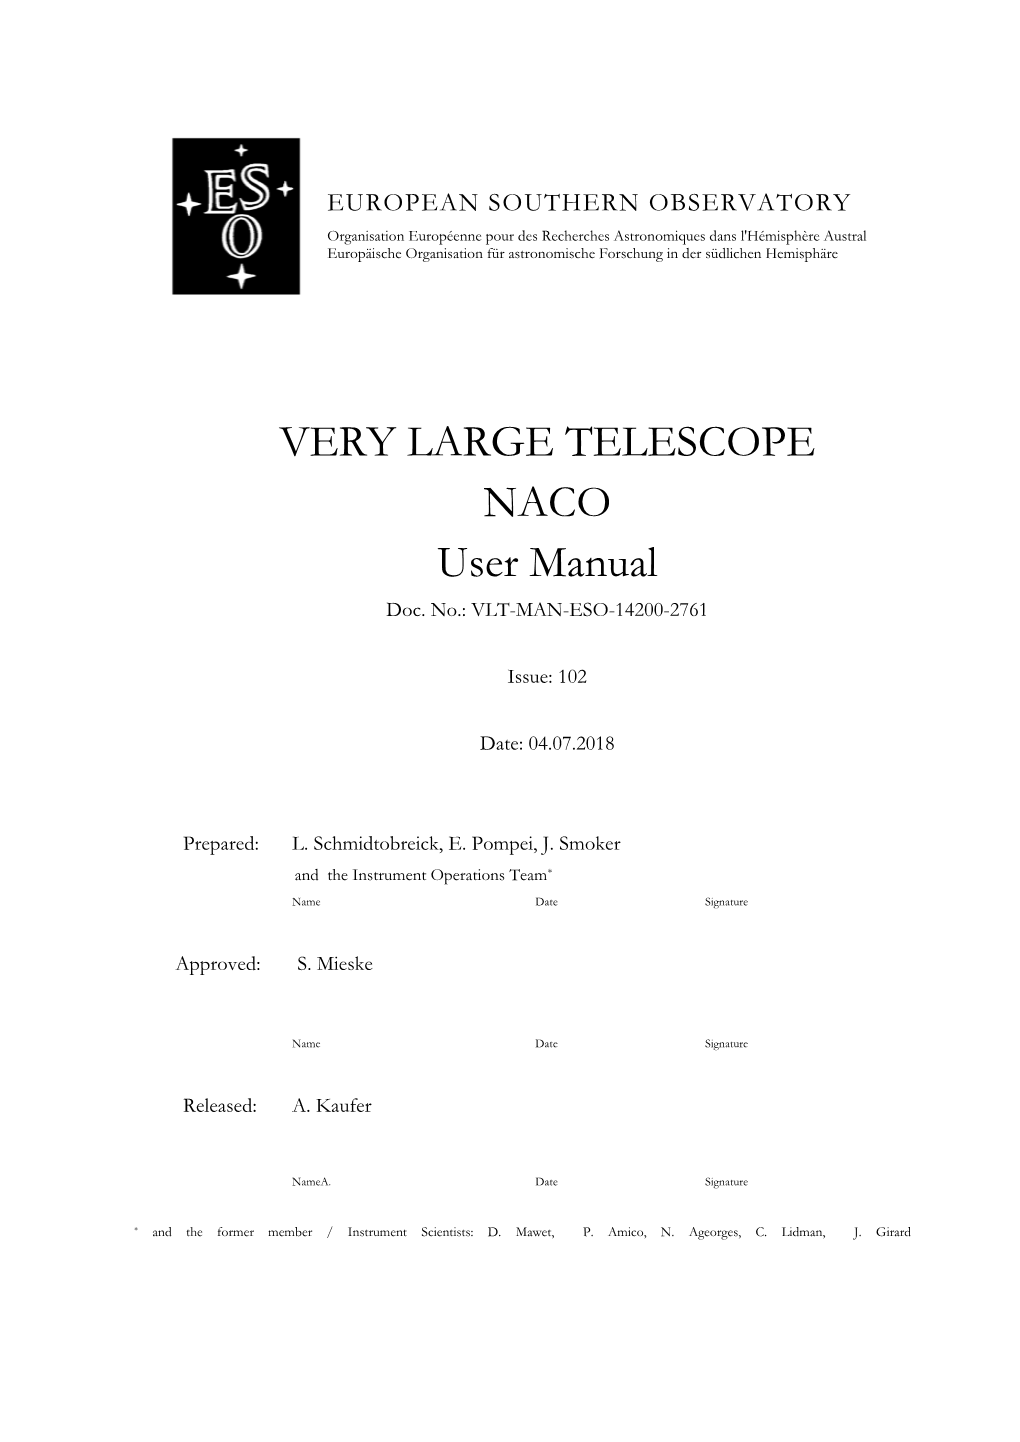 VERY LARGE TELESCOPE NACO User Manual Doc